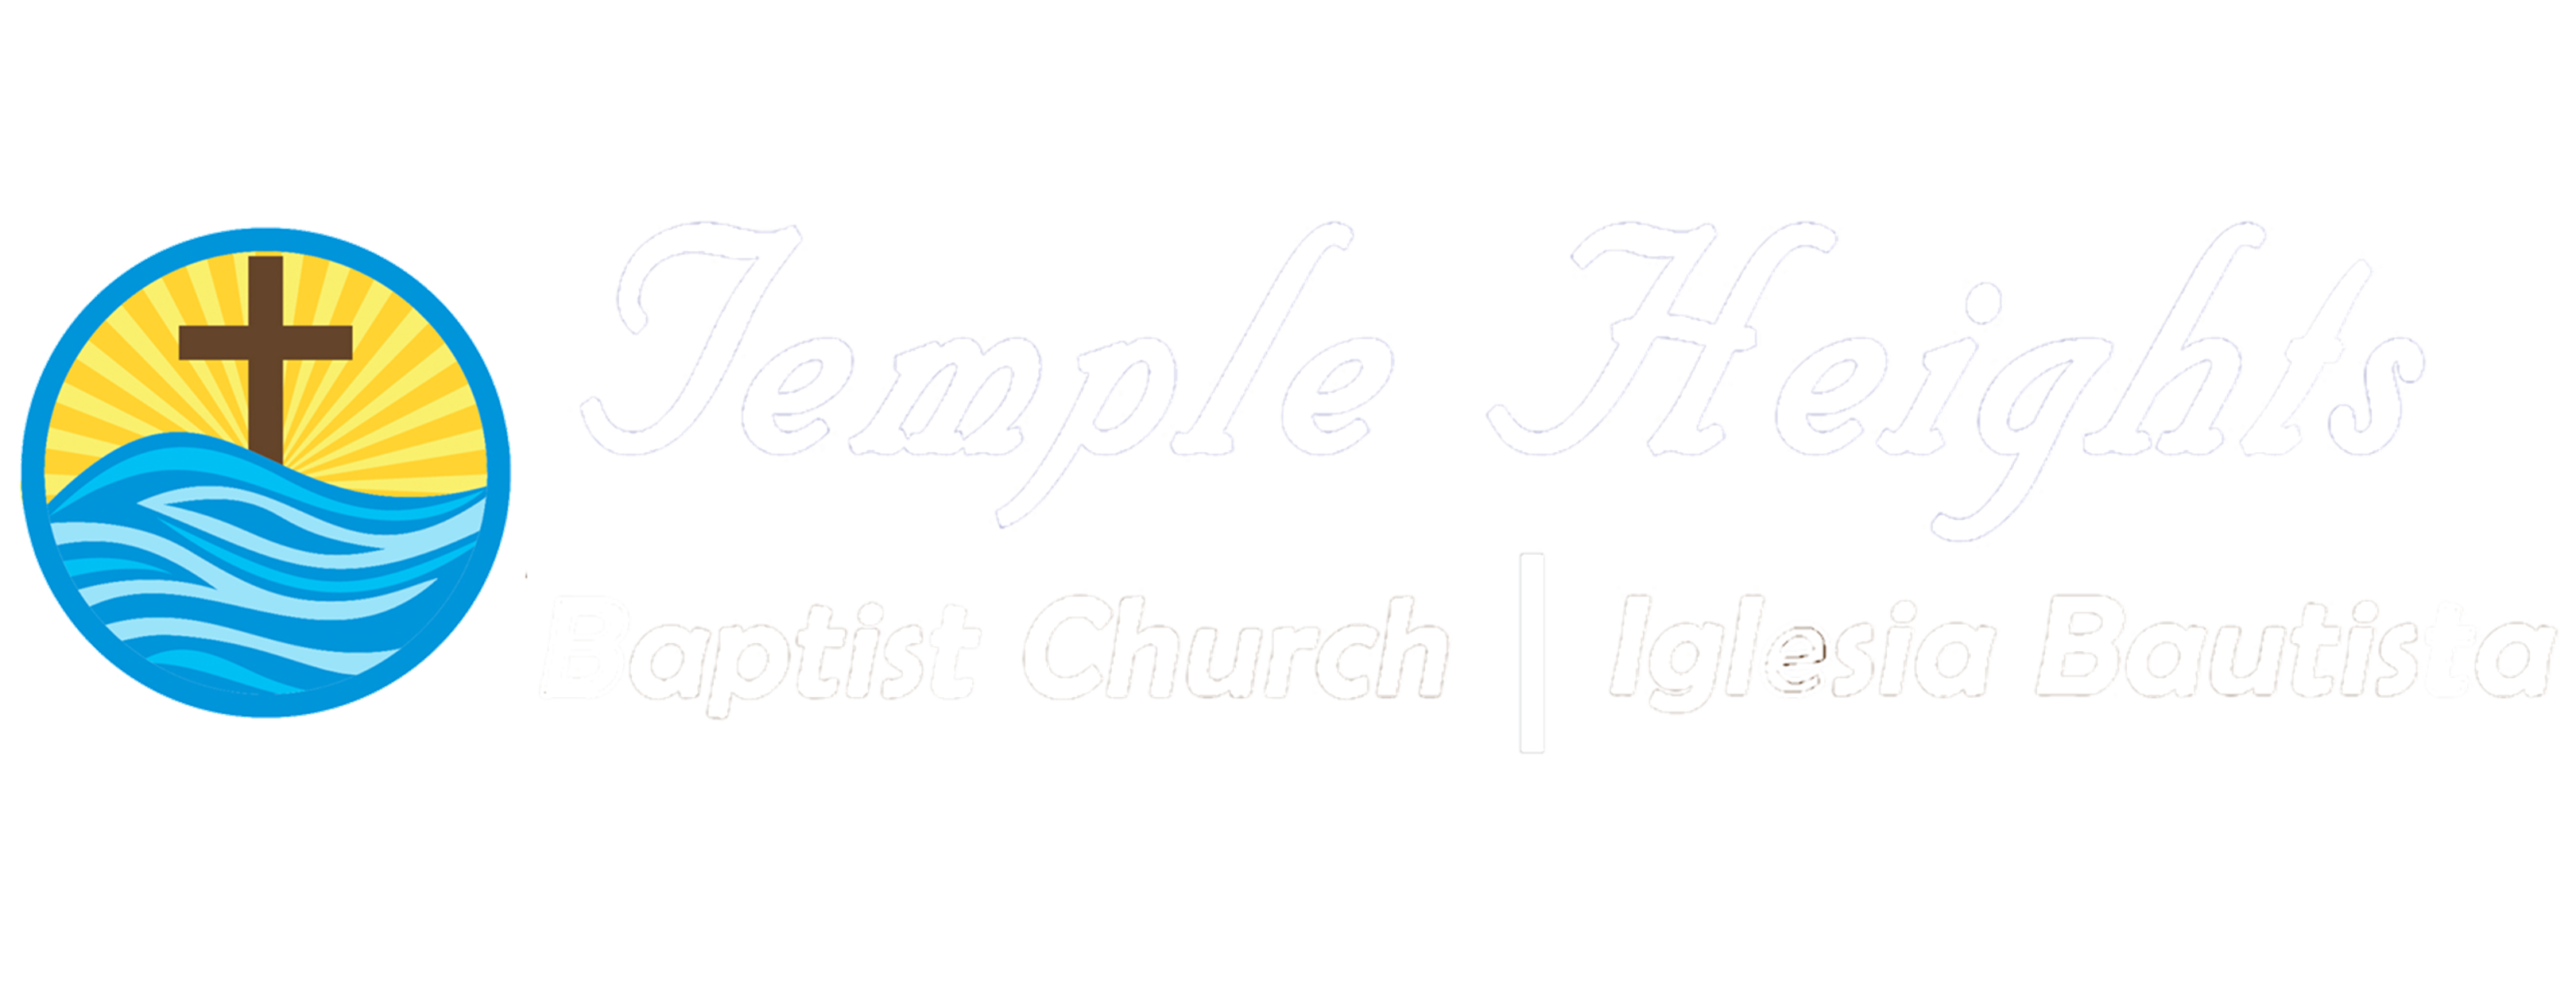 Church Logo Horizontal Transparent White Big Lettering